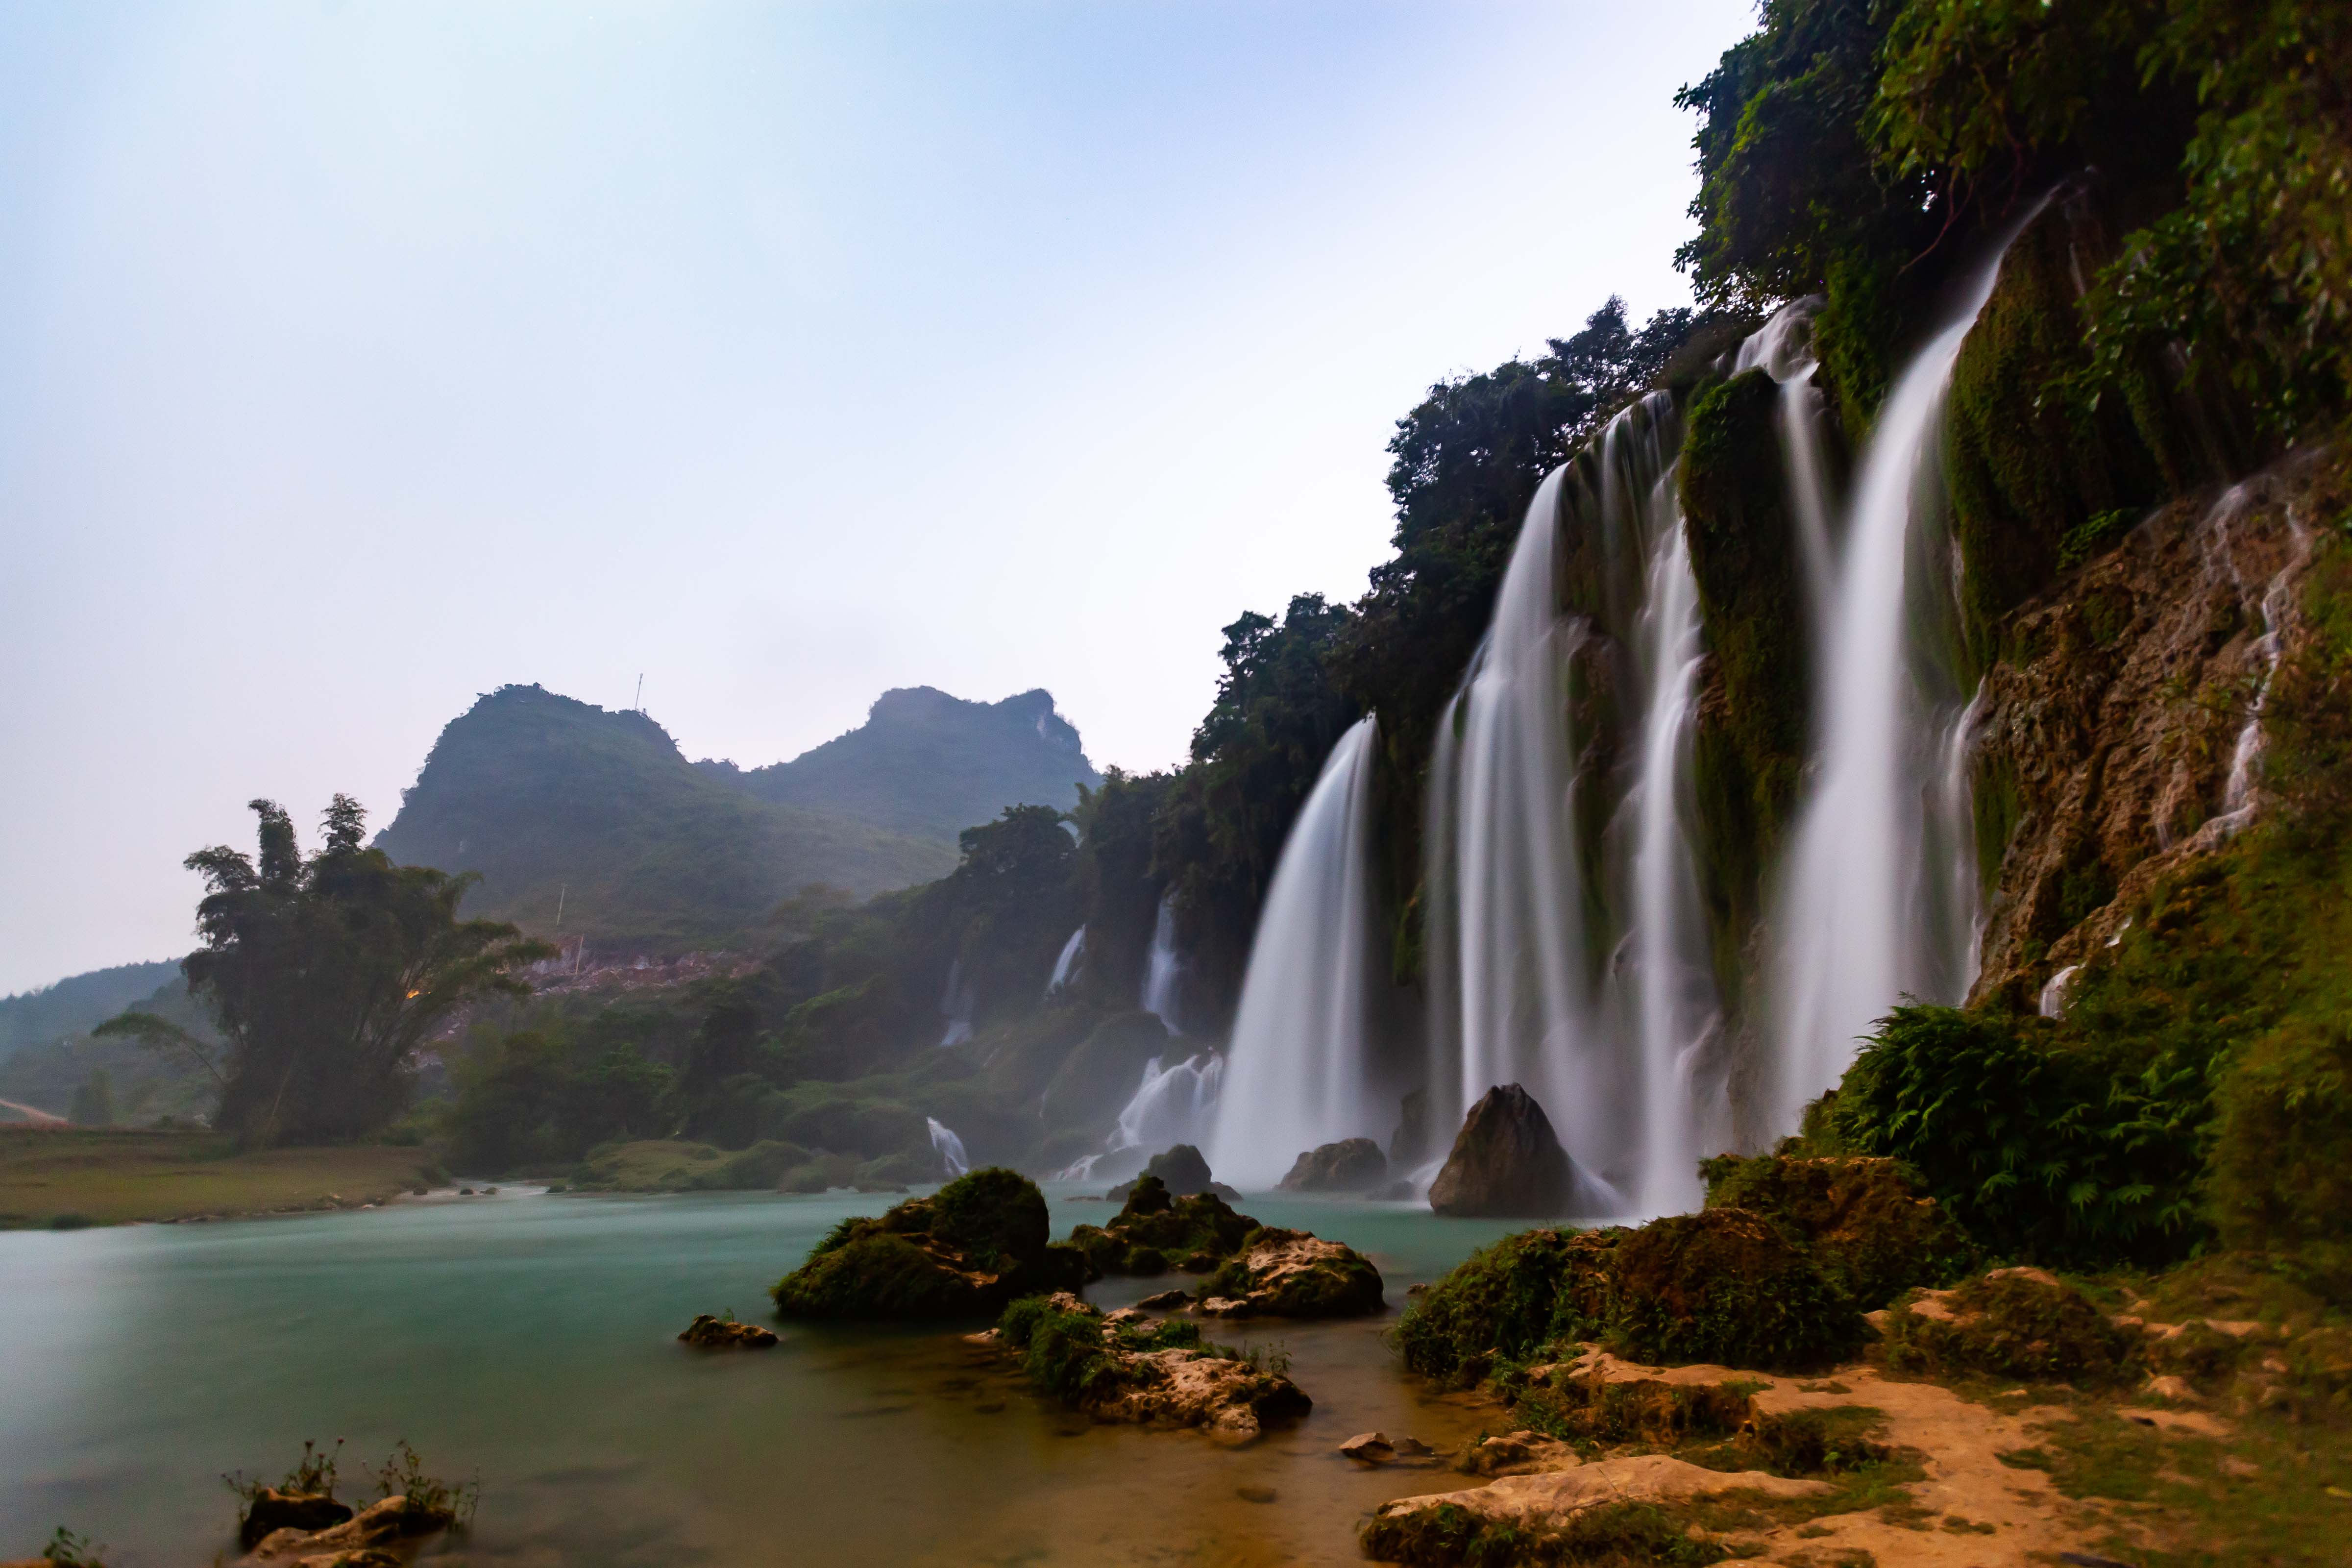 Vietnam, Cao Bang Prov, Waterfall, 2011, IMG 0779